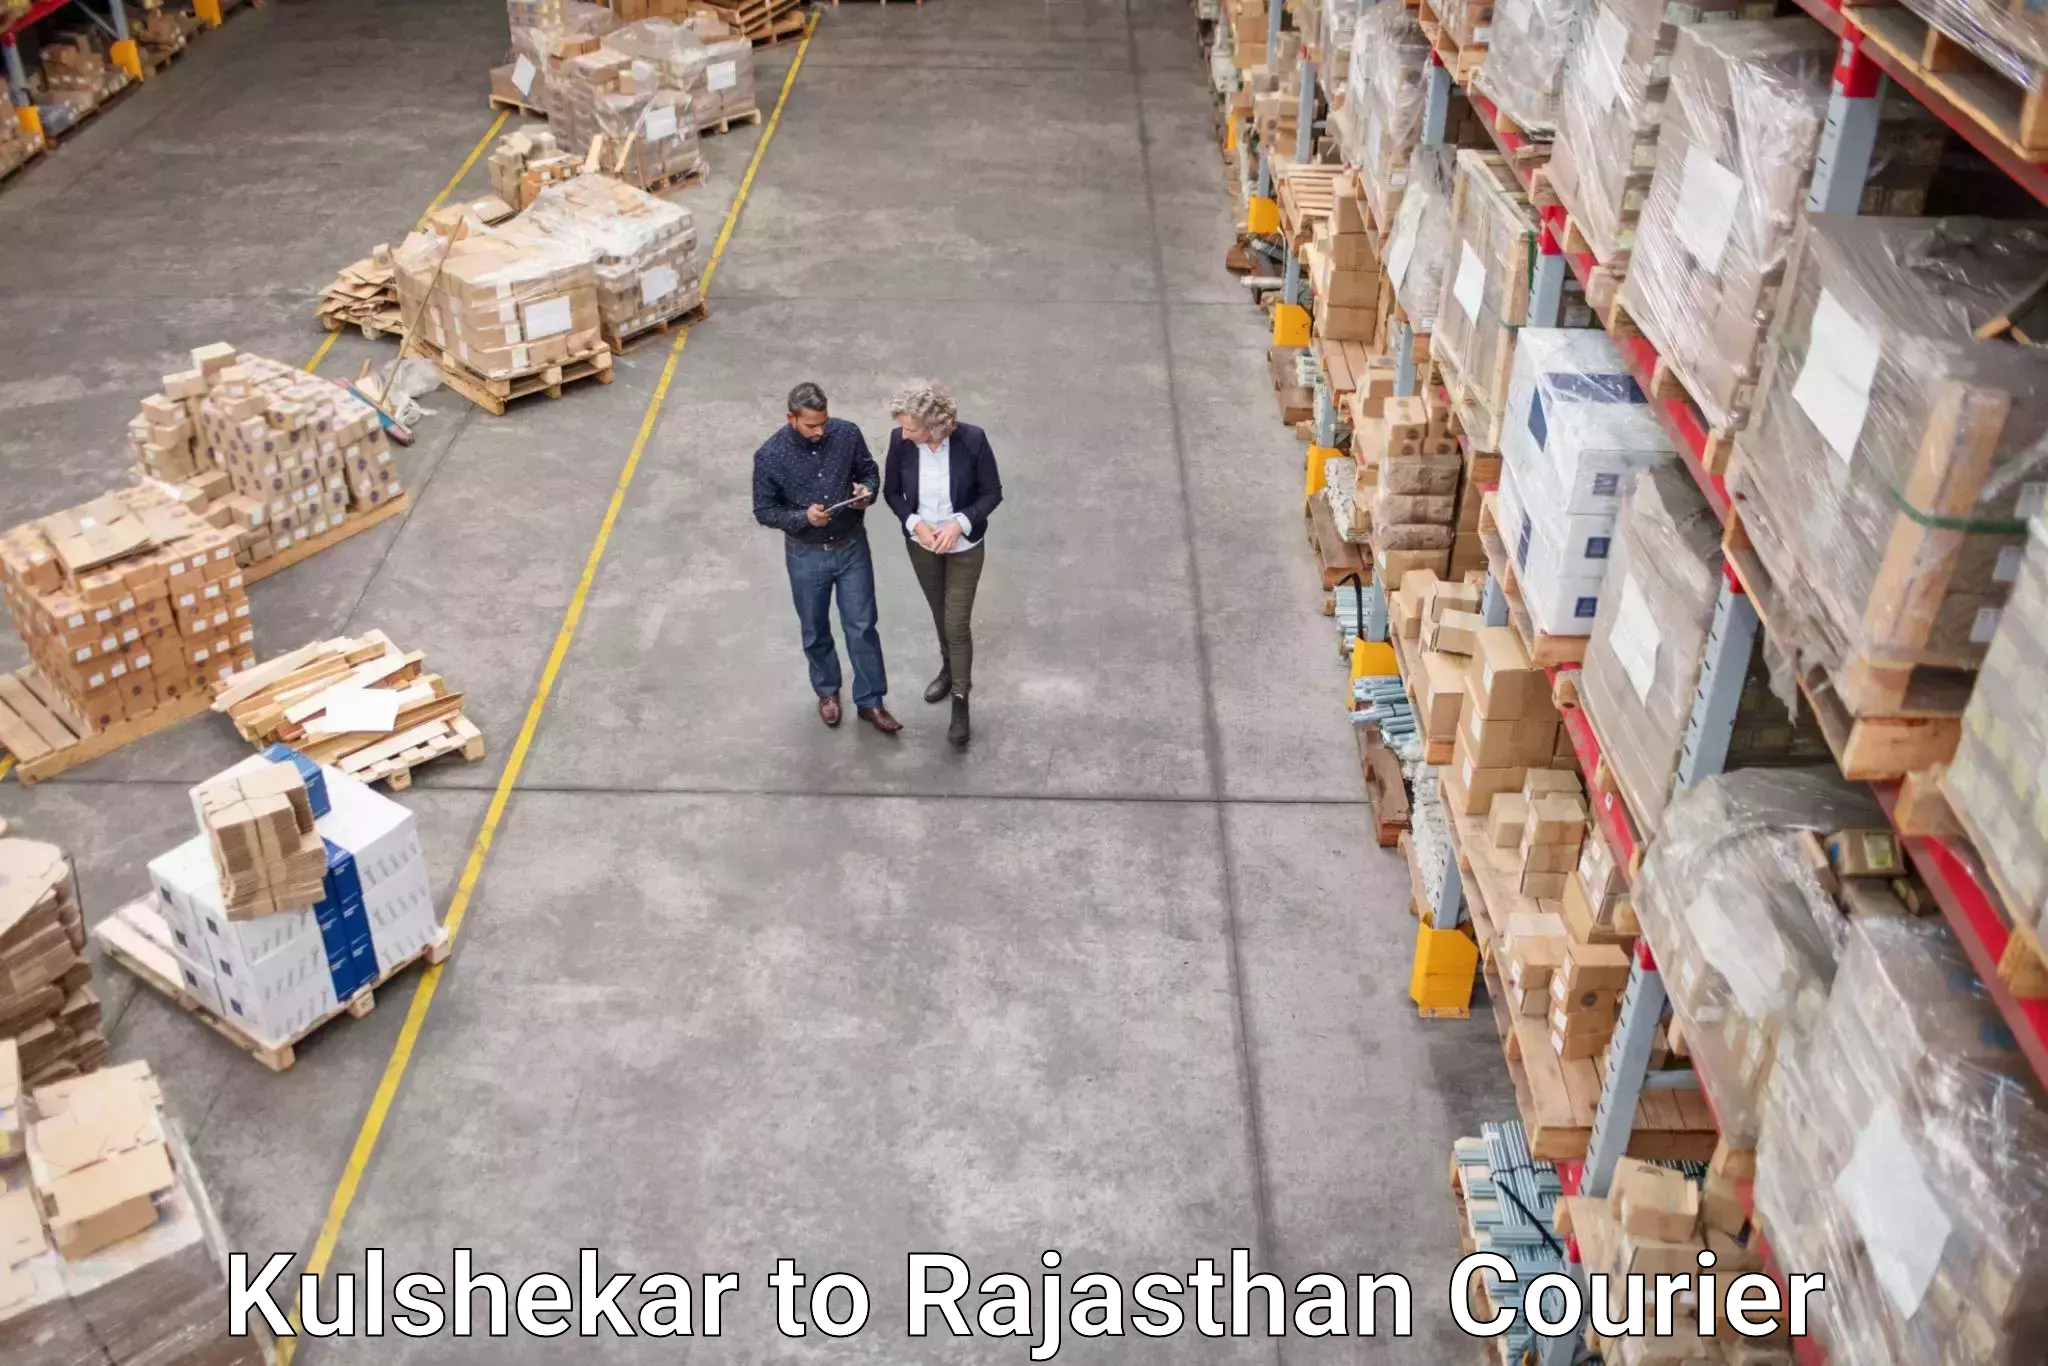 Courier service innovation Kulshekar to Kishangarh